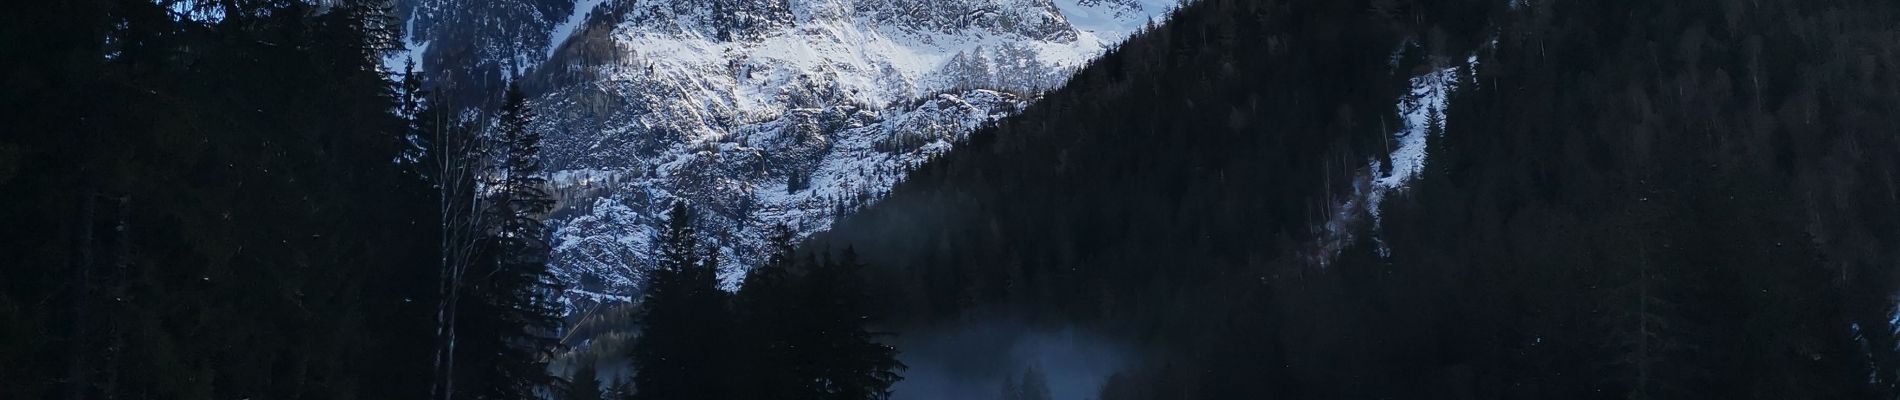 Percorso Marcia Chamonix-Mont-Blanc - CHAMONIX... depuis l' Arveyron jusqu'à la Floria.  - Photo